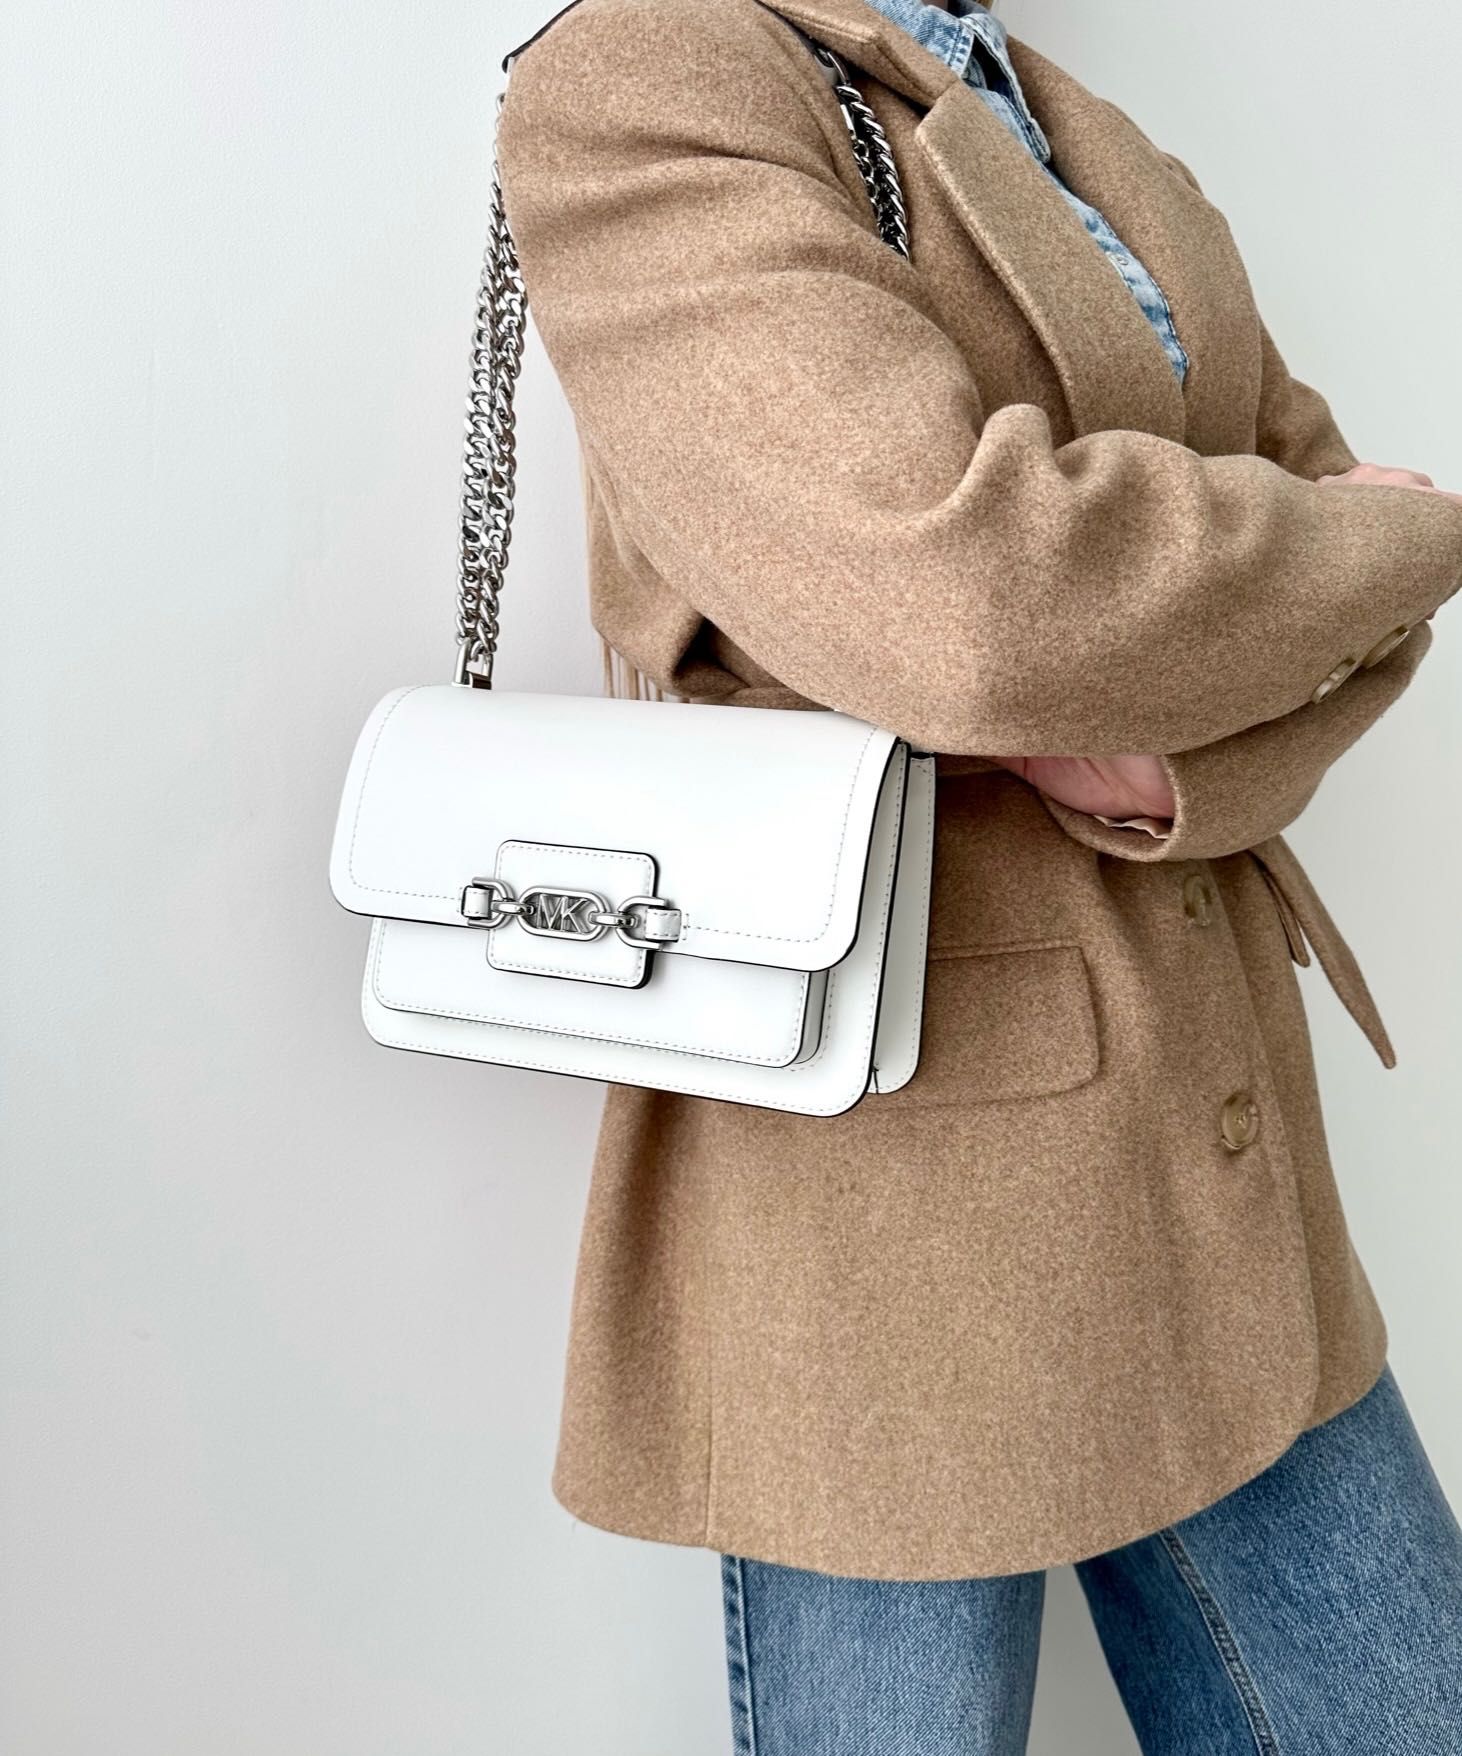 Michael Kors Heather Large Жіноча сумочка женская сумка подарок жене